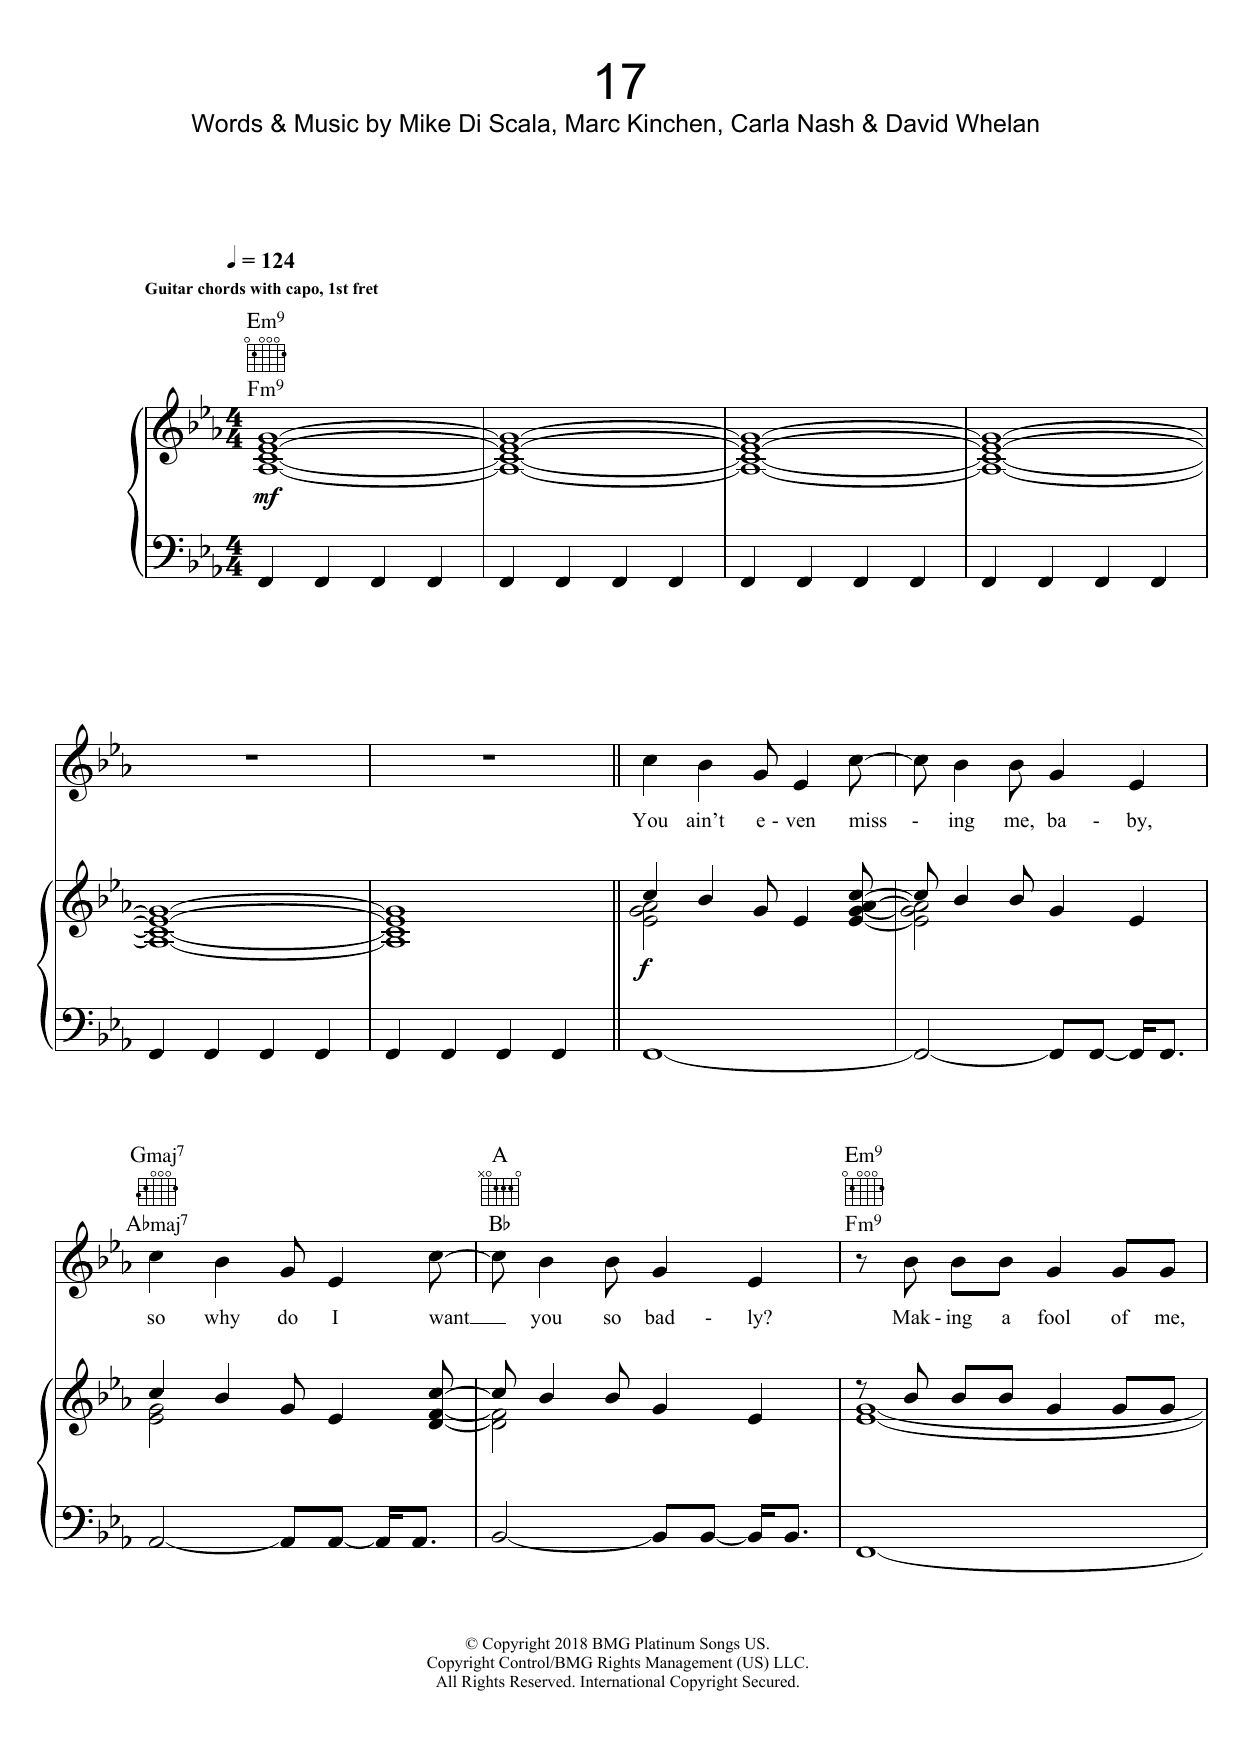 MK 17 sheet music notes and chords arranged for Beginner Ukulele